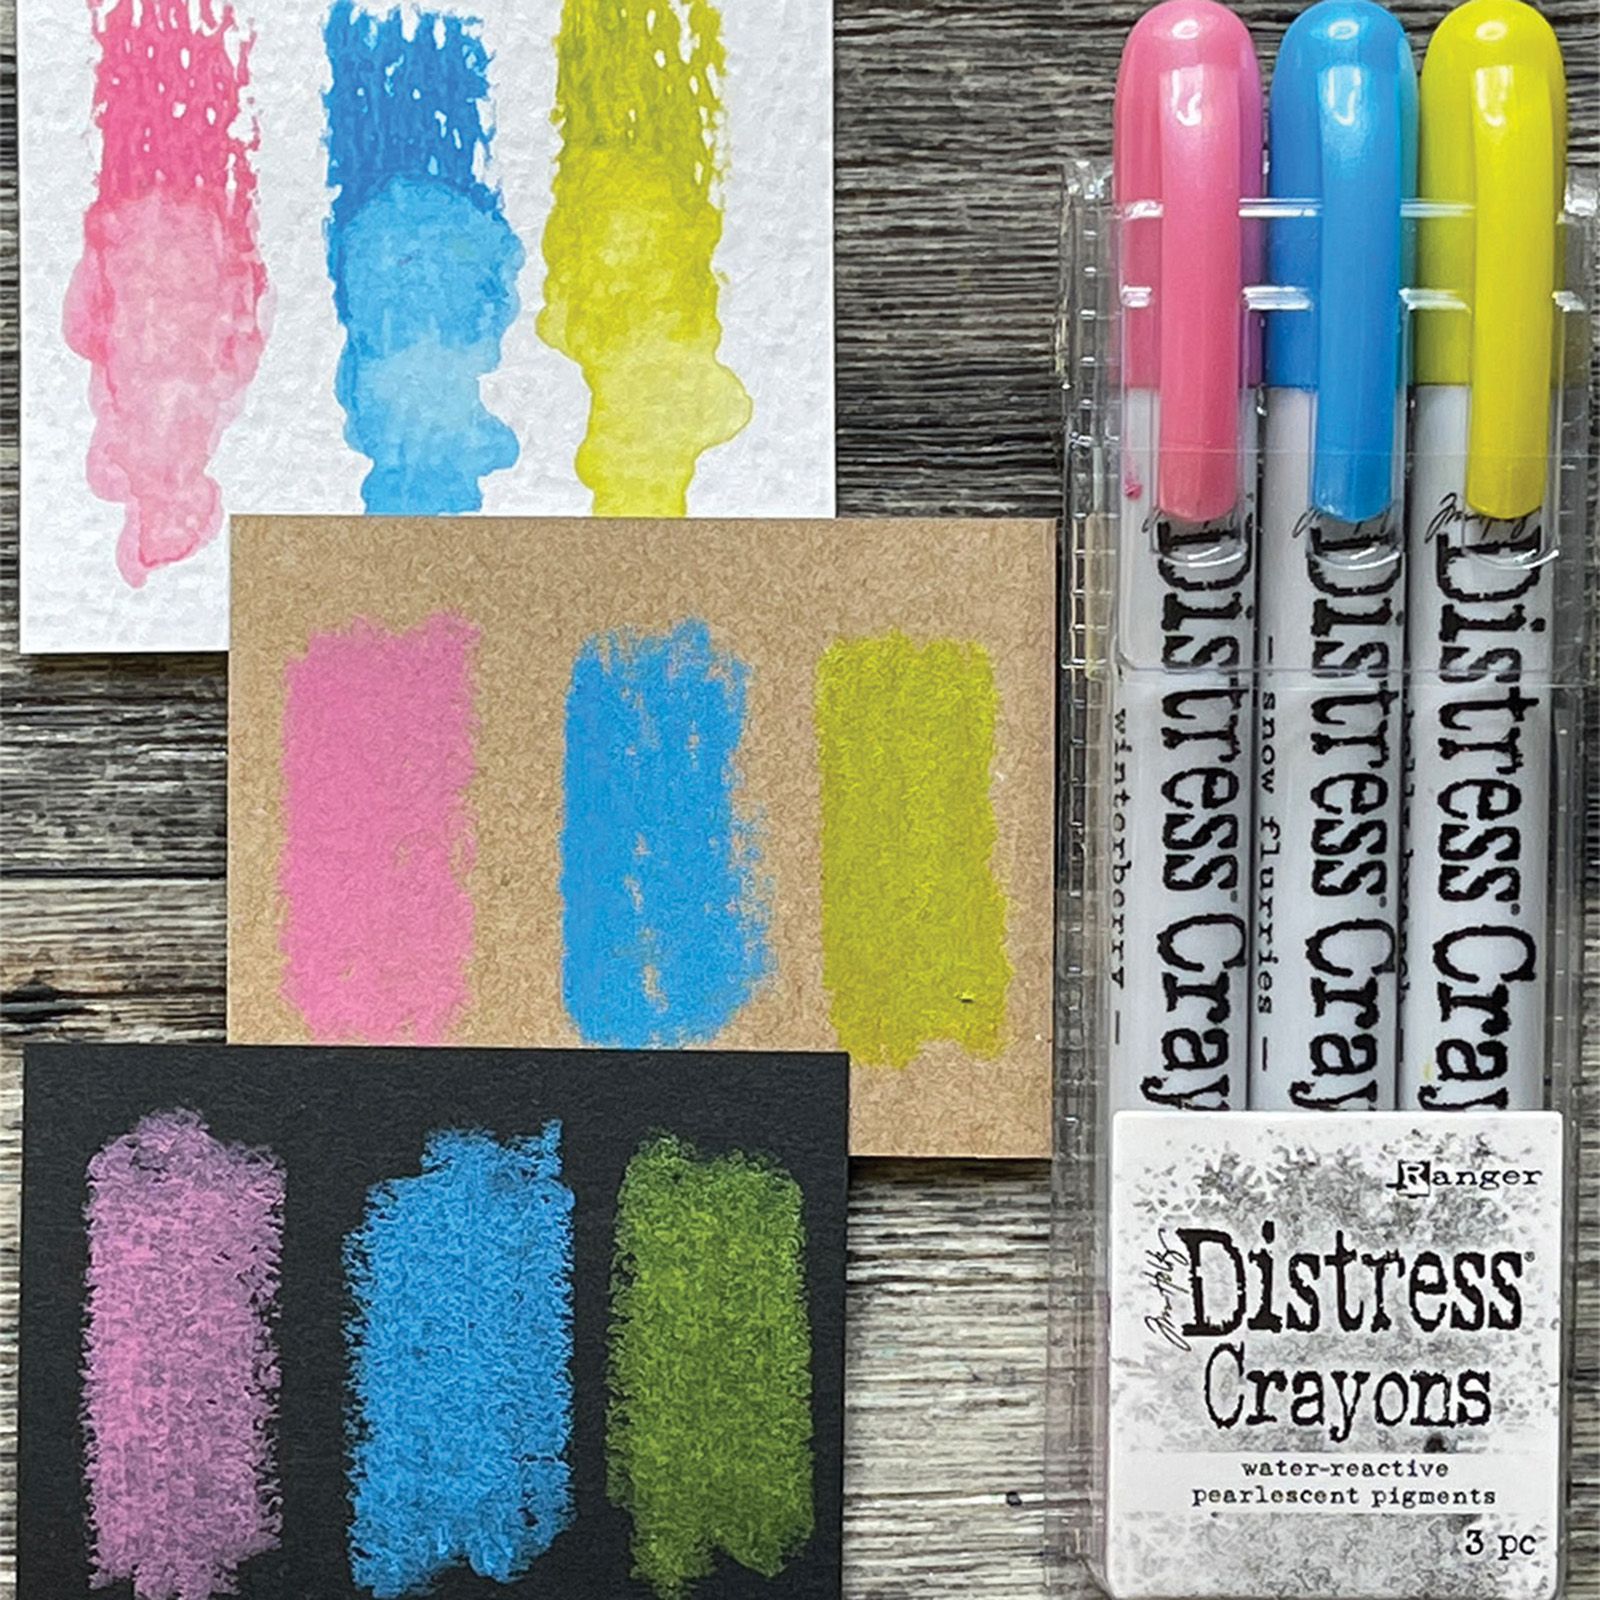 Tim Holtz Distress Crayons 